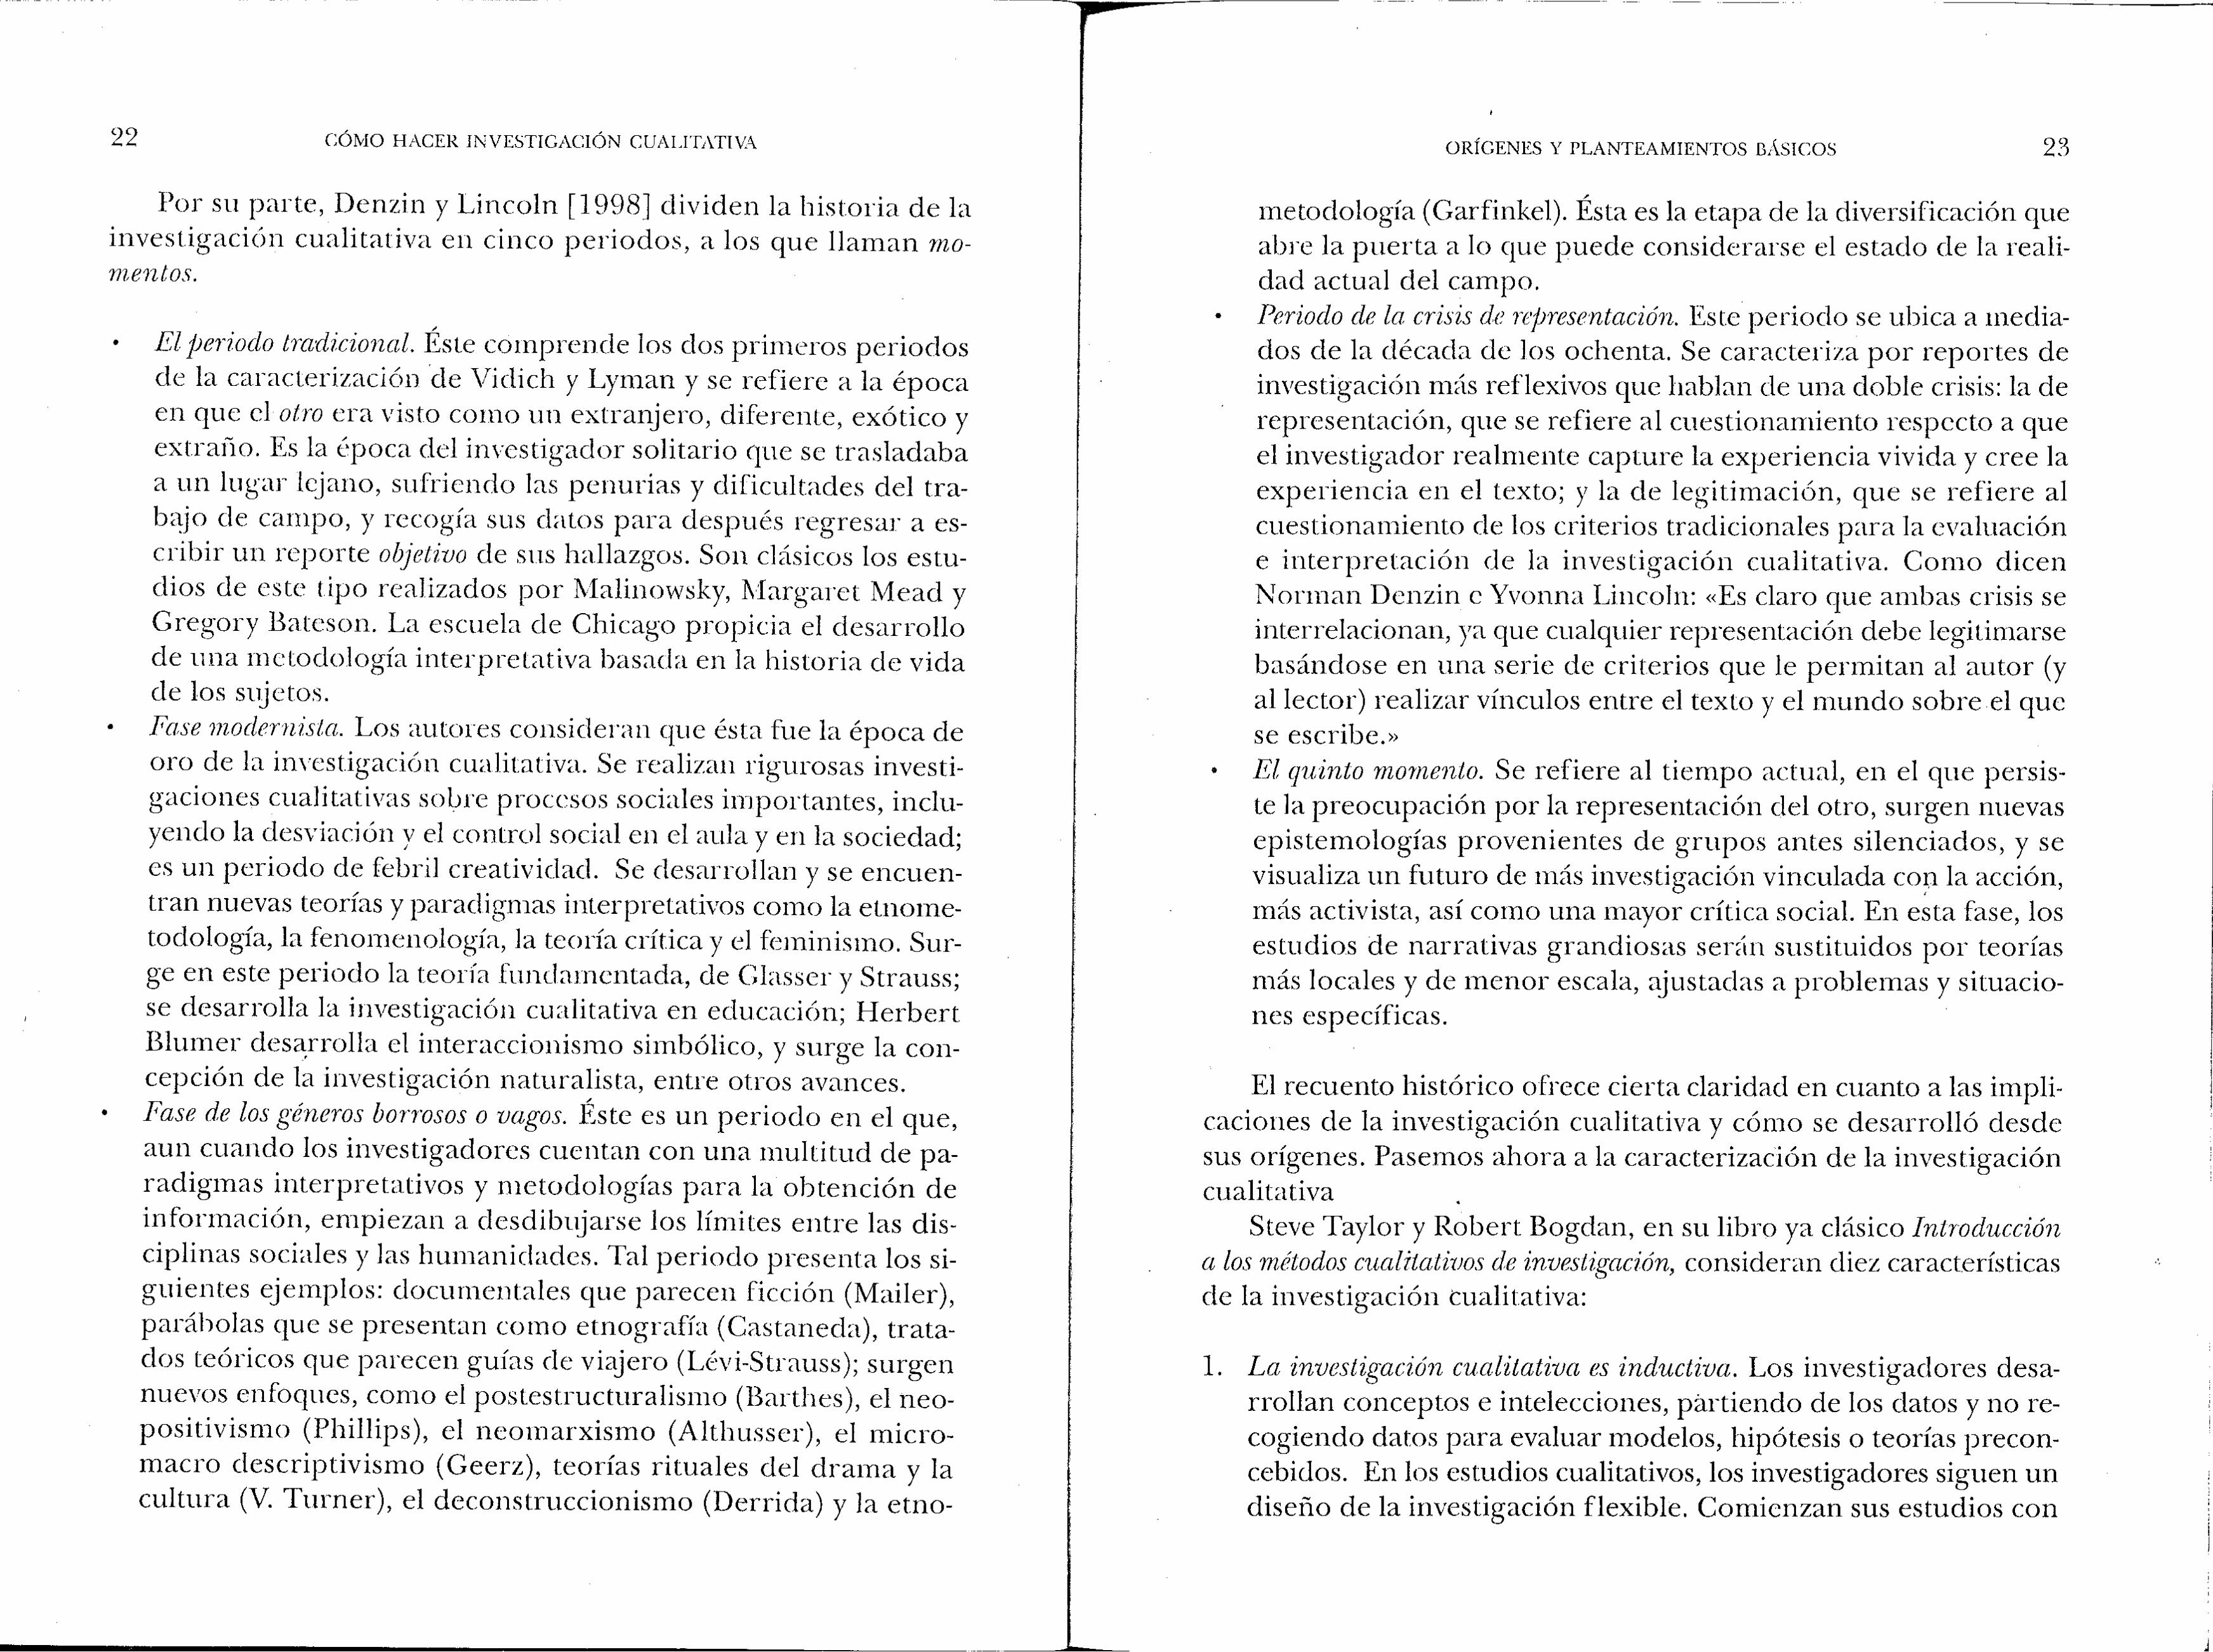 (PDF) Bibliografc3ada-de-referencia-investigacic3b3n-cualitativa-juan ...